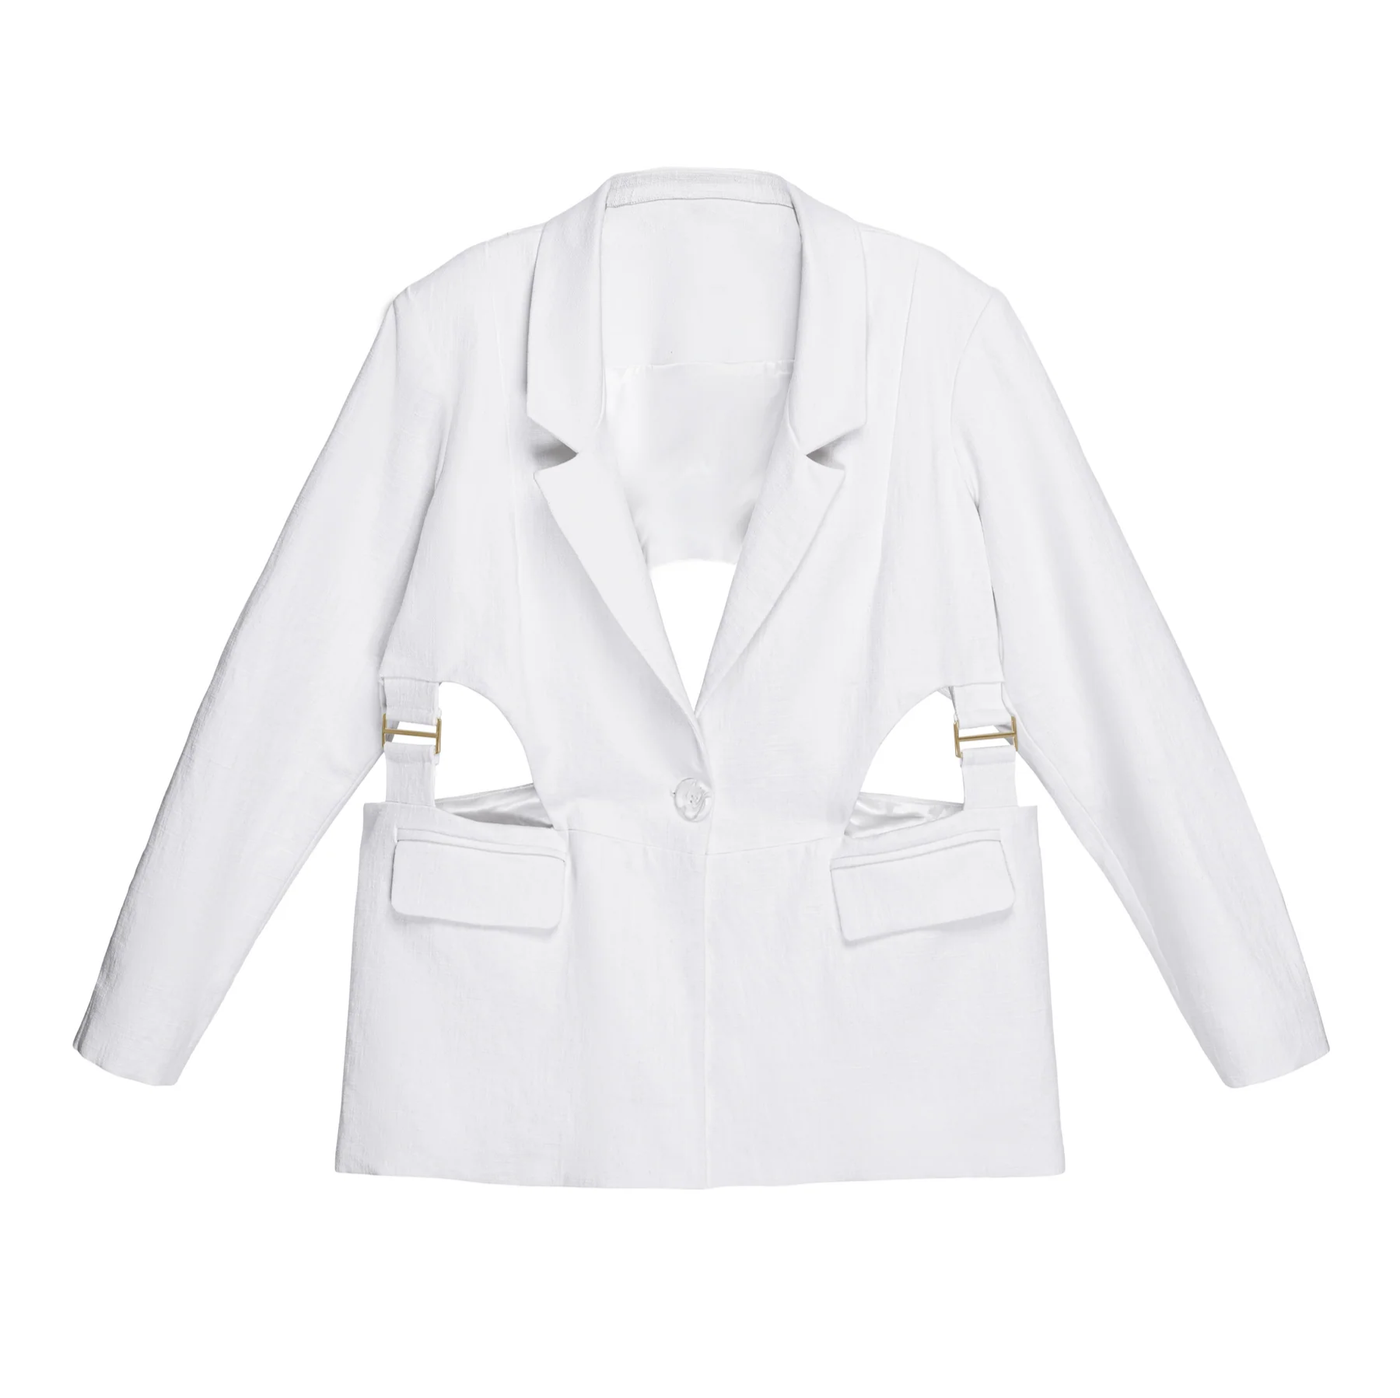 Gotstyle Fashion - Hilary MacMillan Blazers Linen Canvas Boxy Fit Cut Out Blazer - White